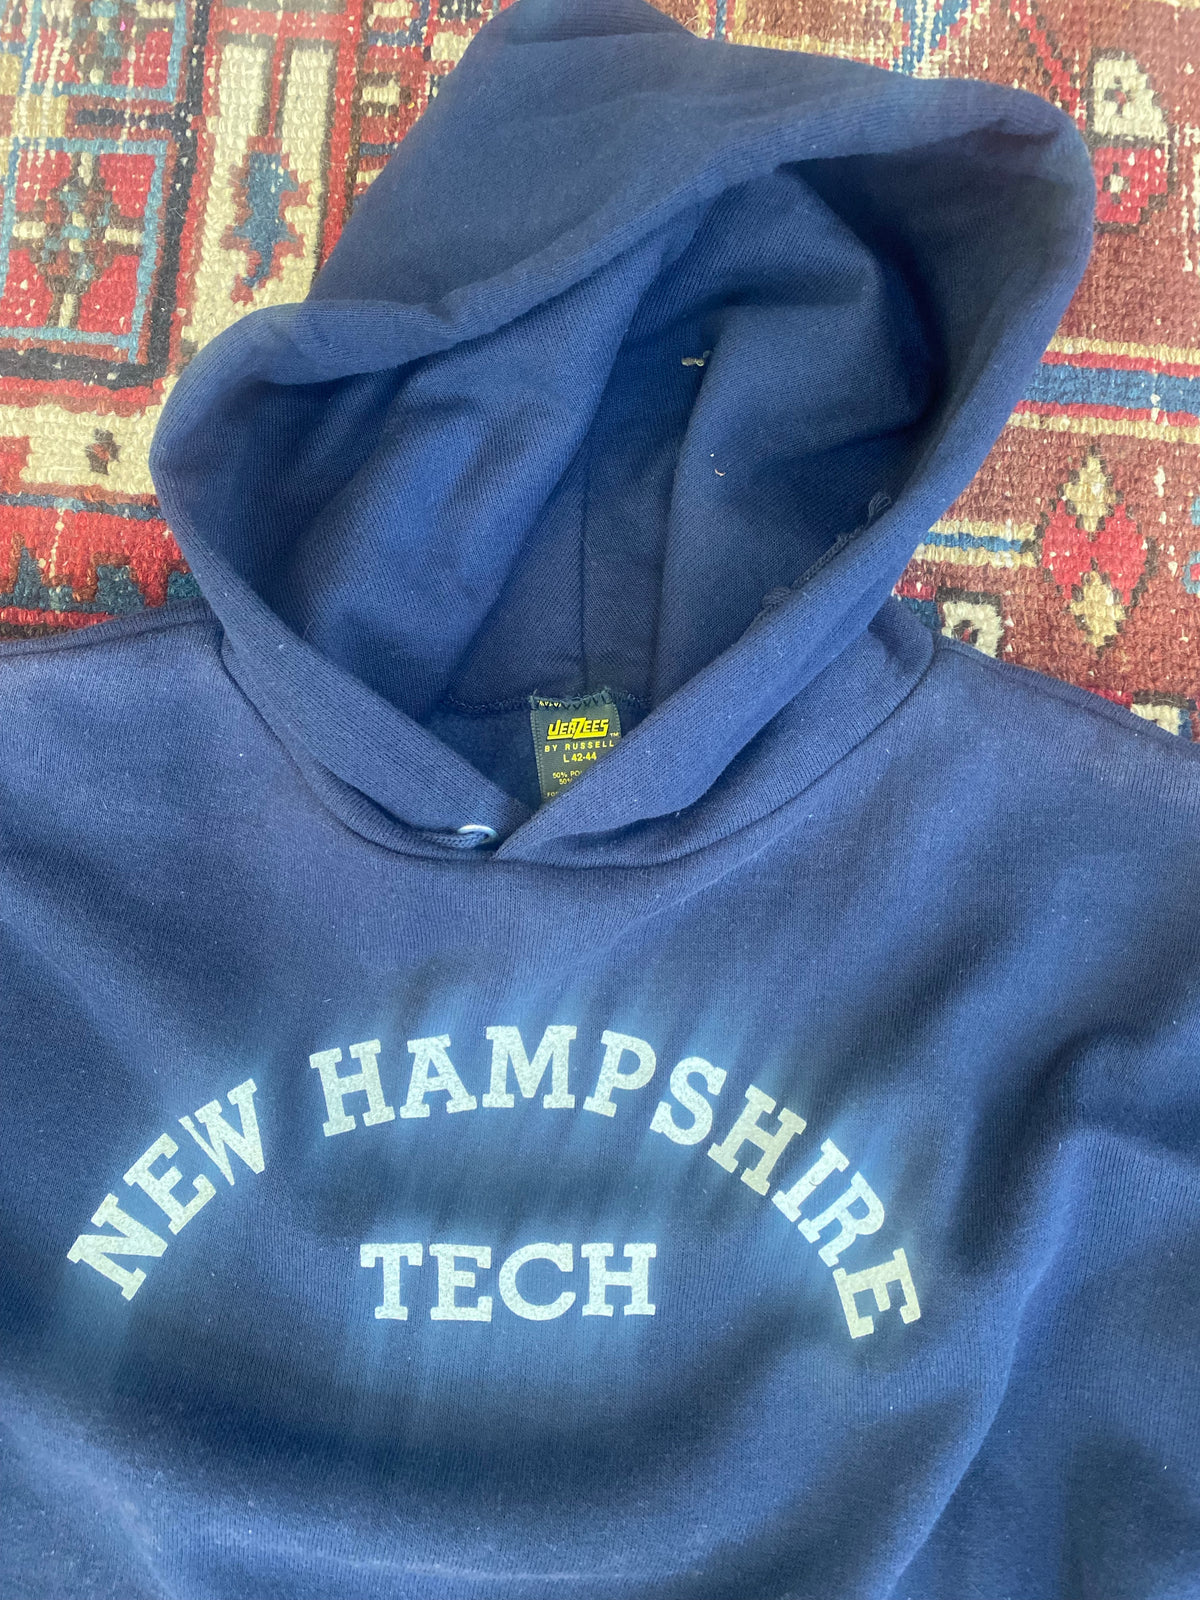 Vintage New Hampshire Tech Hoodie